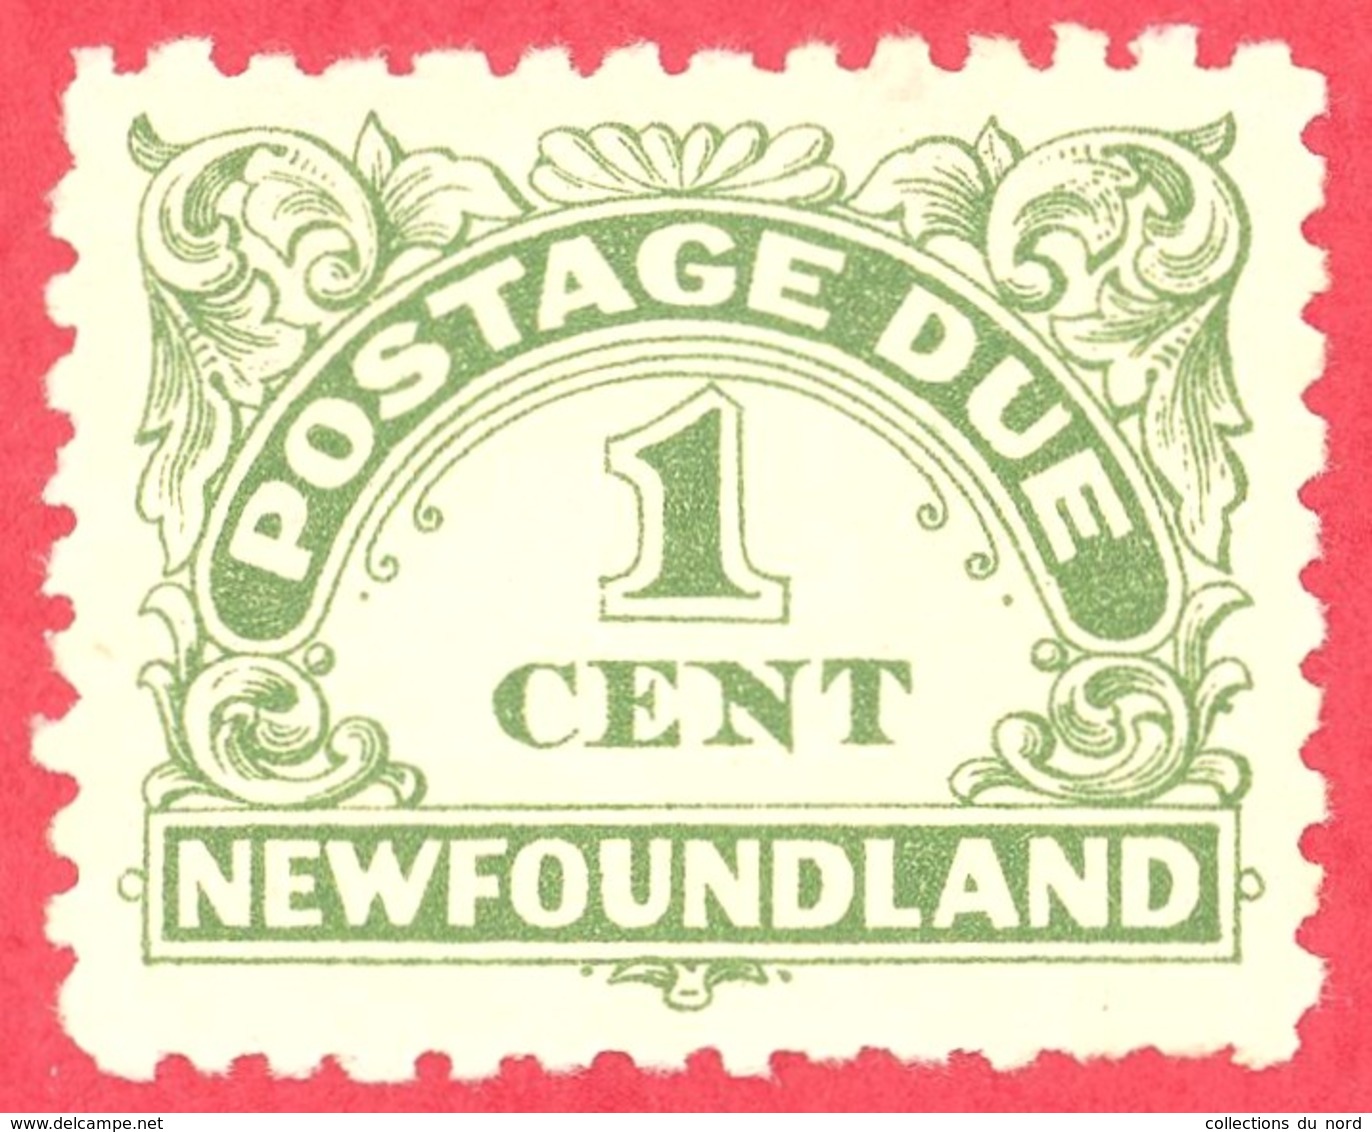 Canada Newfoundland # J1 Mint VF - Postage Due - Fine Di Catalogo (Back Of Book)